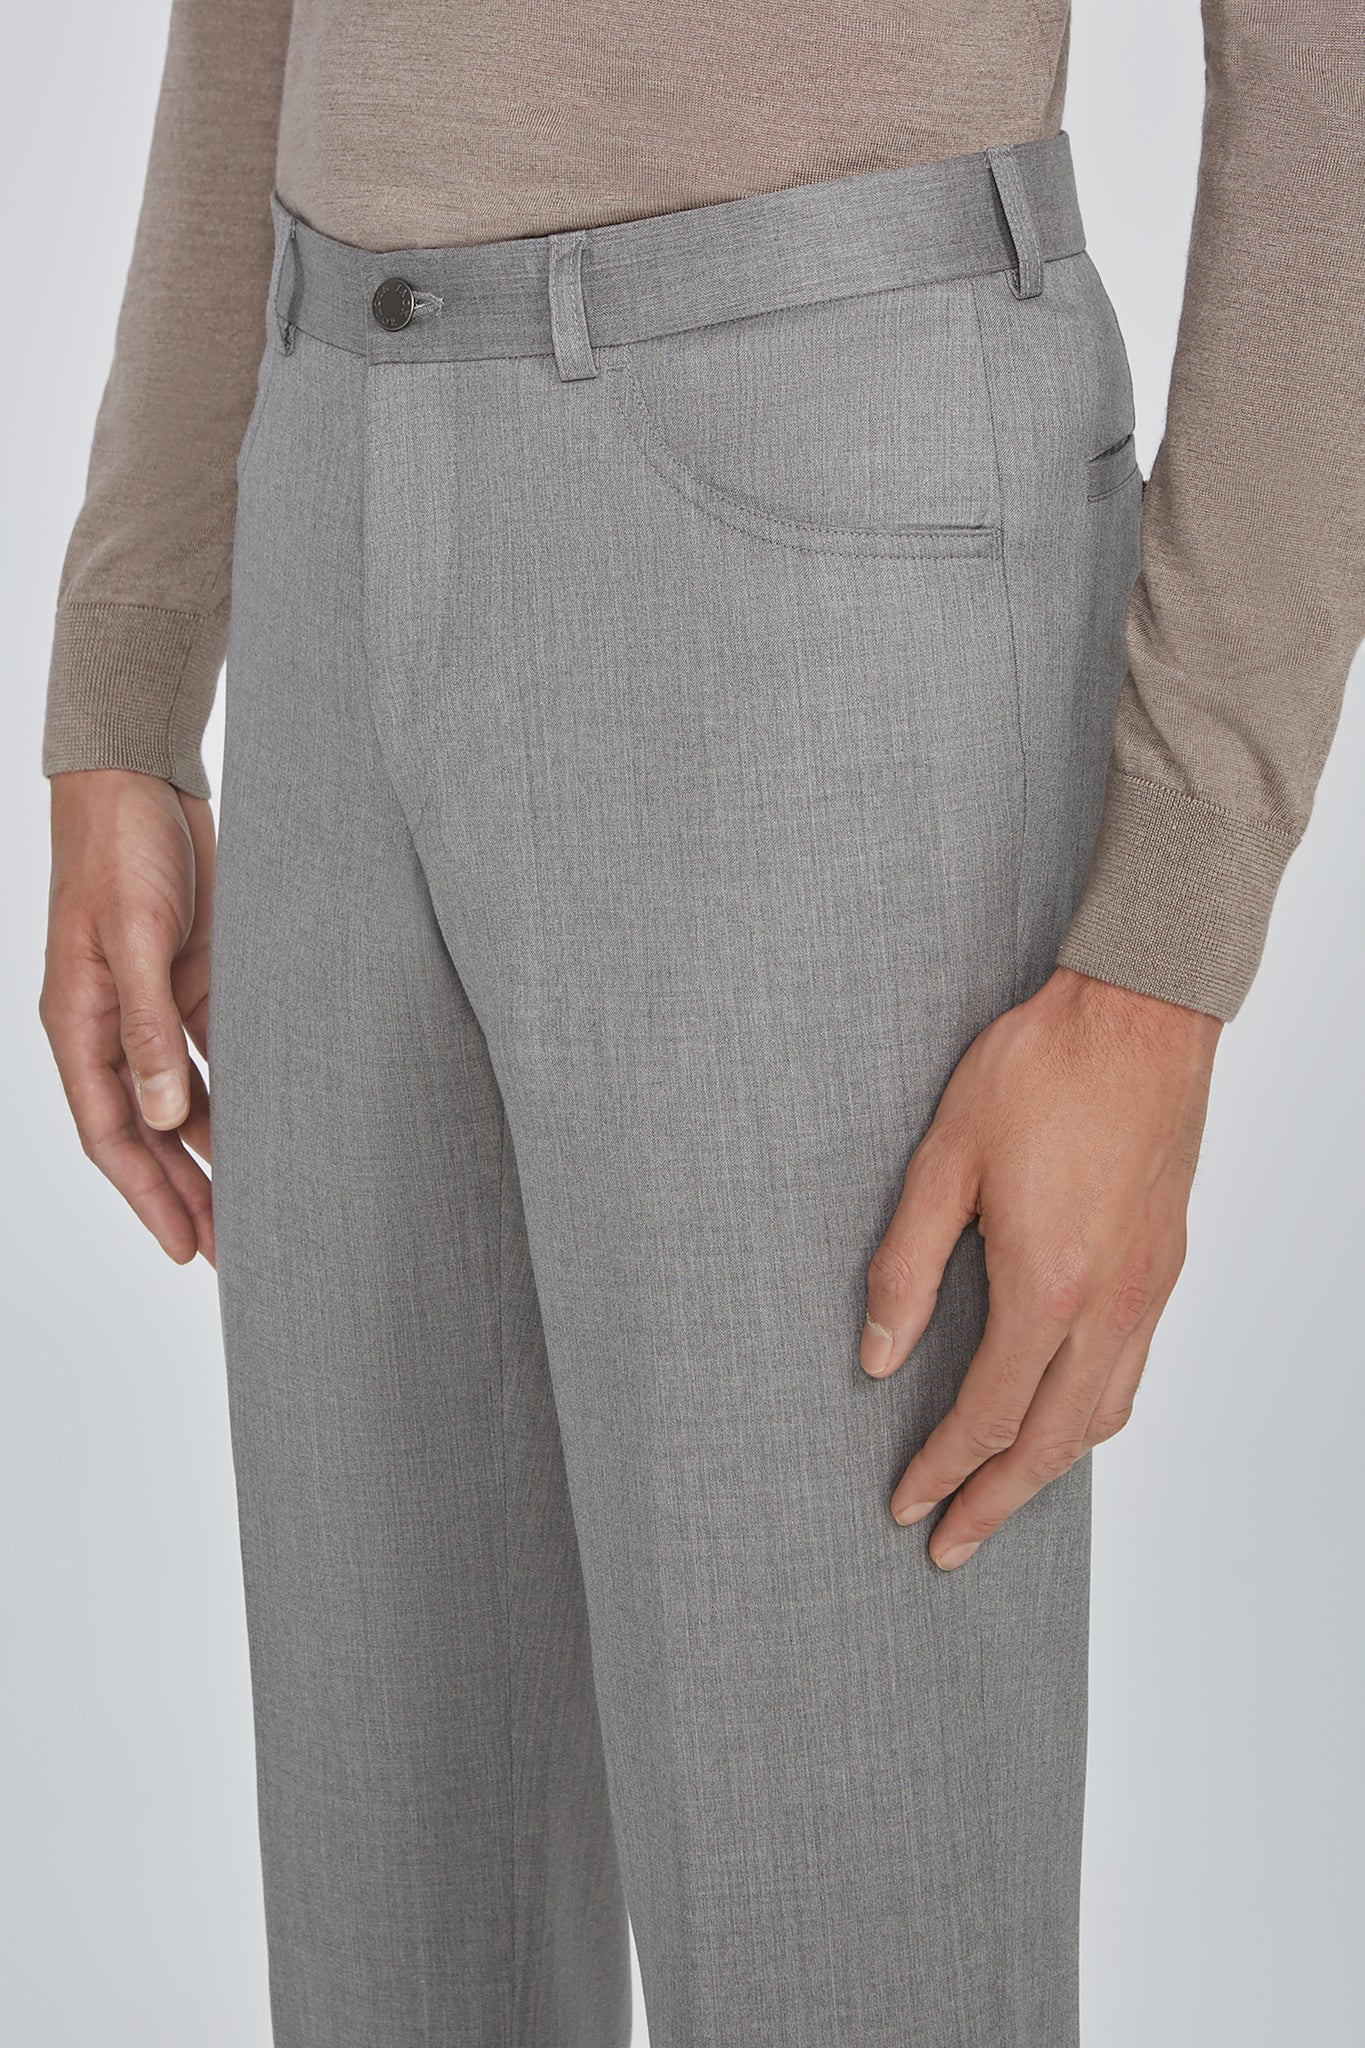 Vue alternative 1 Pantalon 5 poches gris clair unie Sage